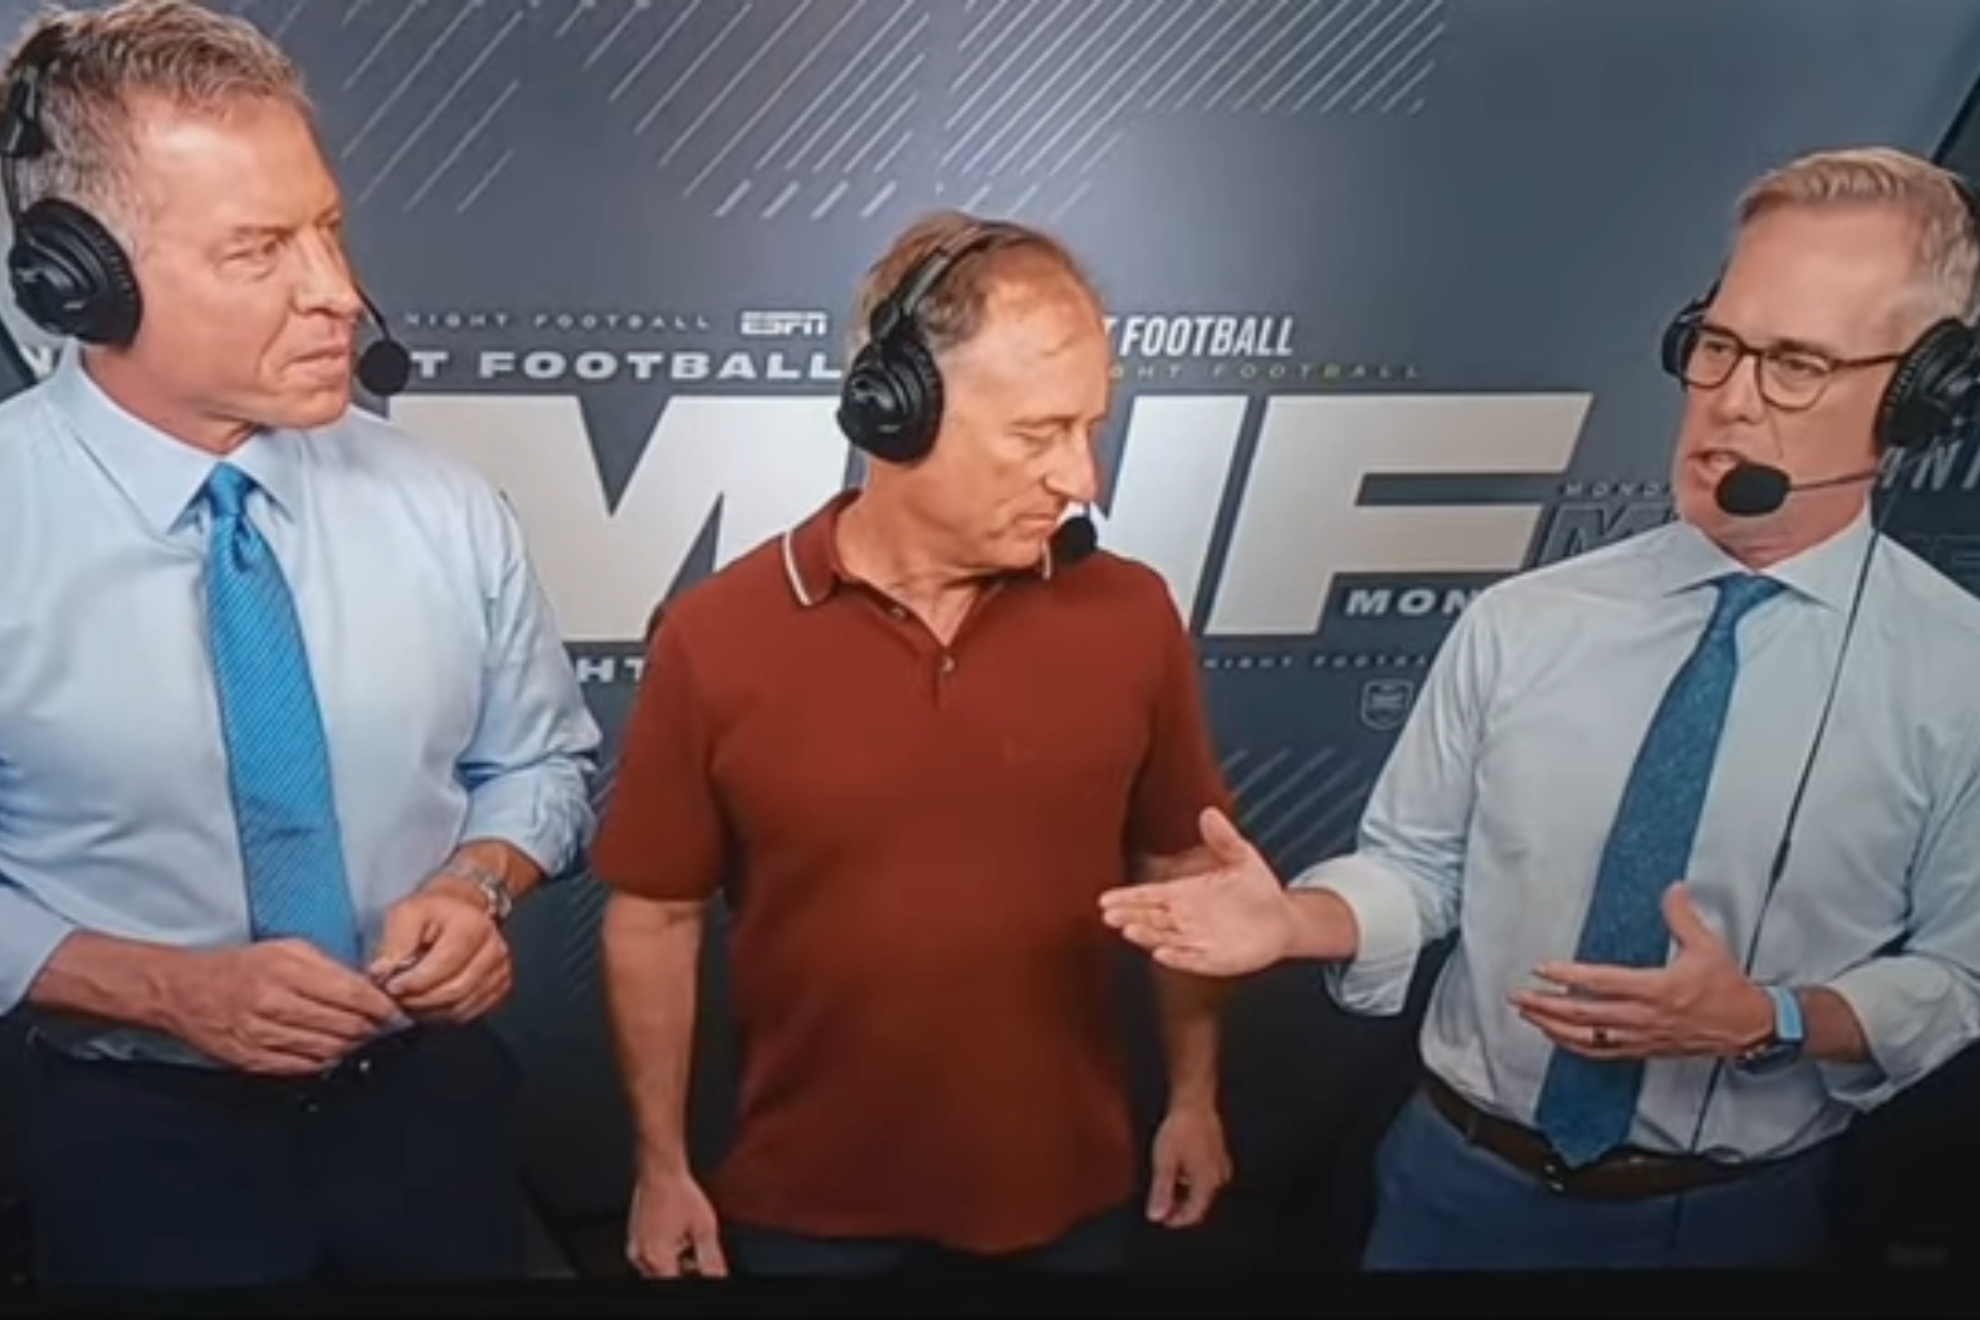 Touchdown of awkwardness: NFL Commentator Joe Buck's misinterpreted handshake delights internet